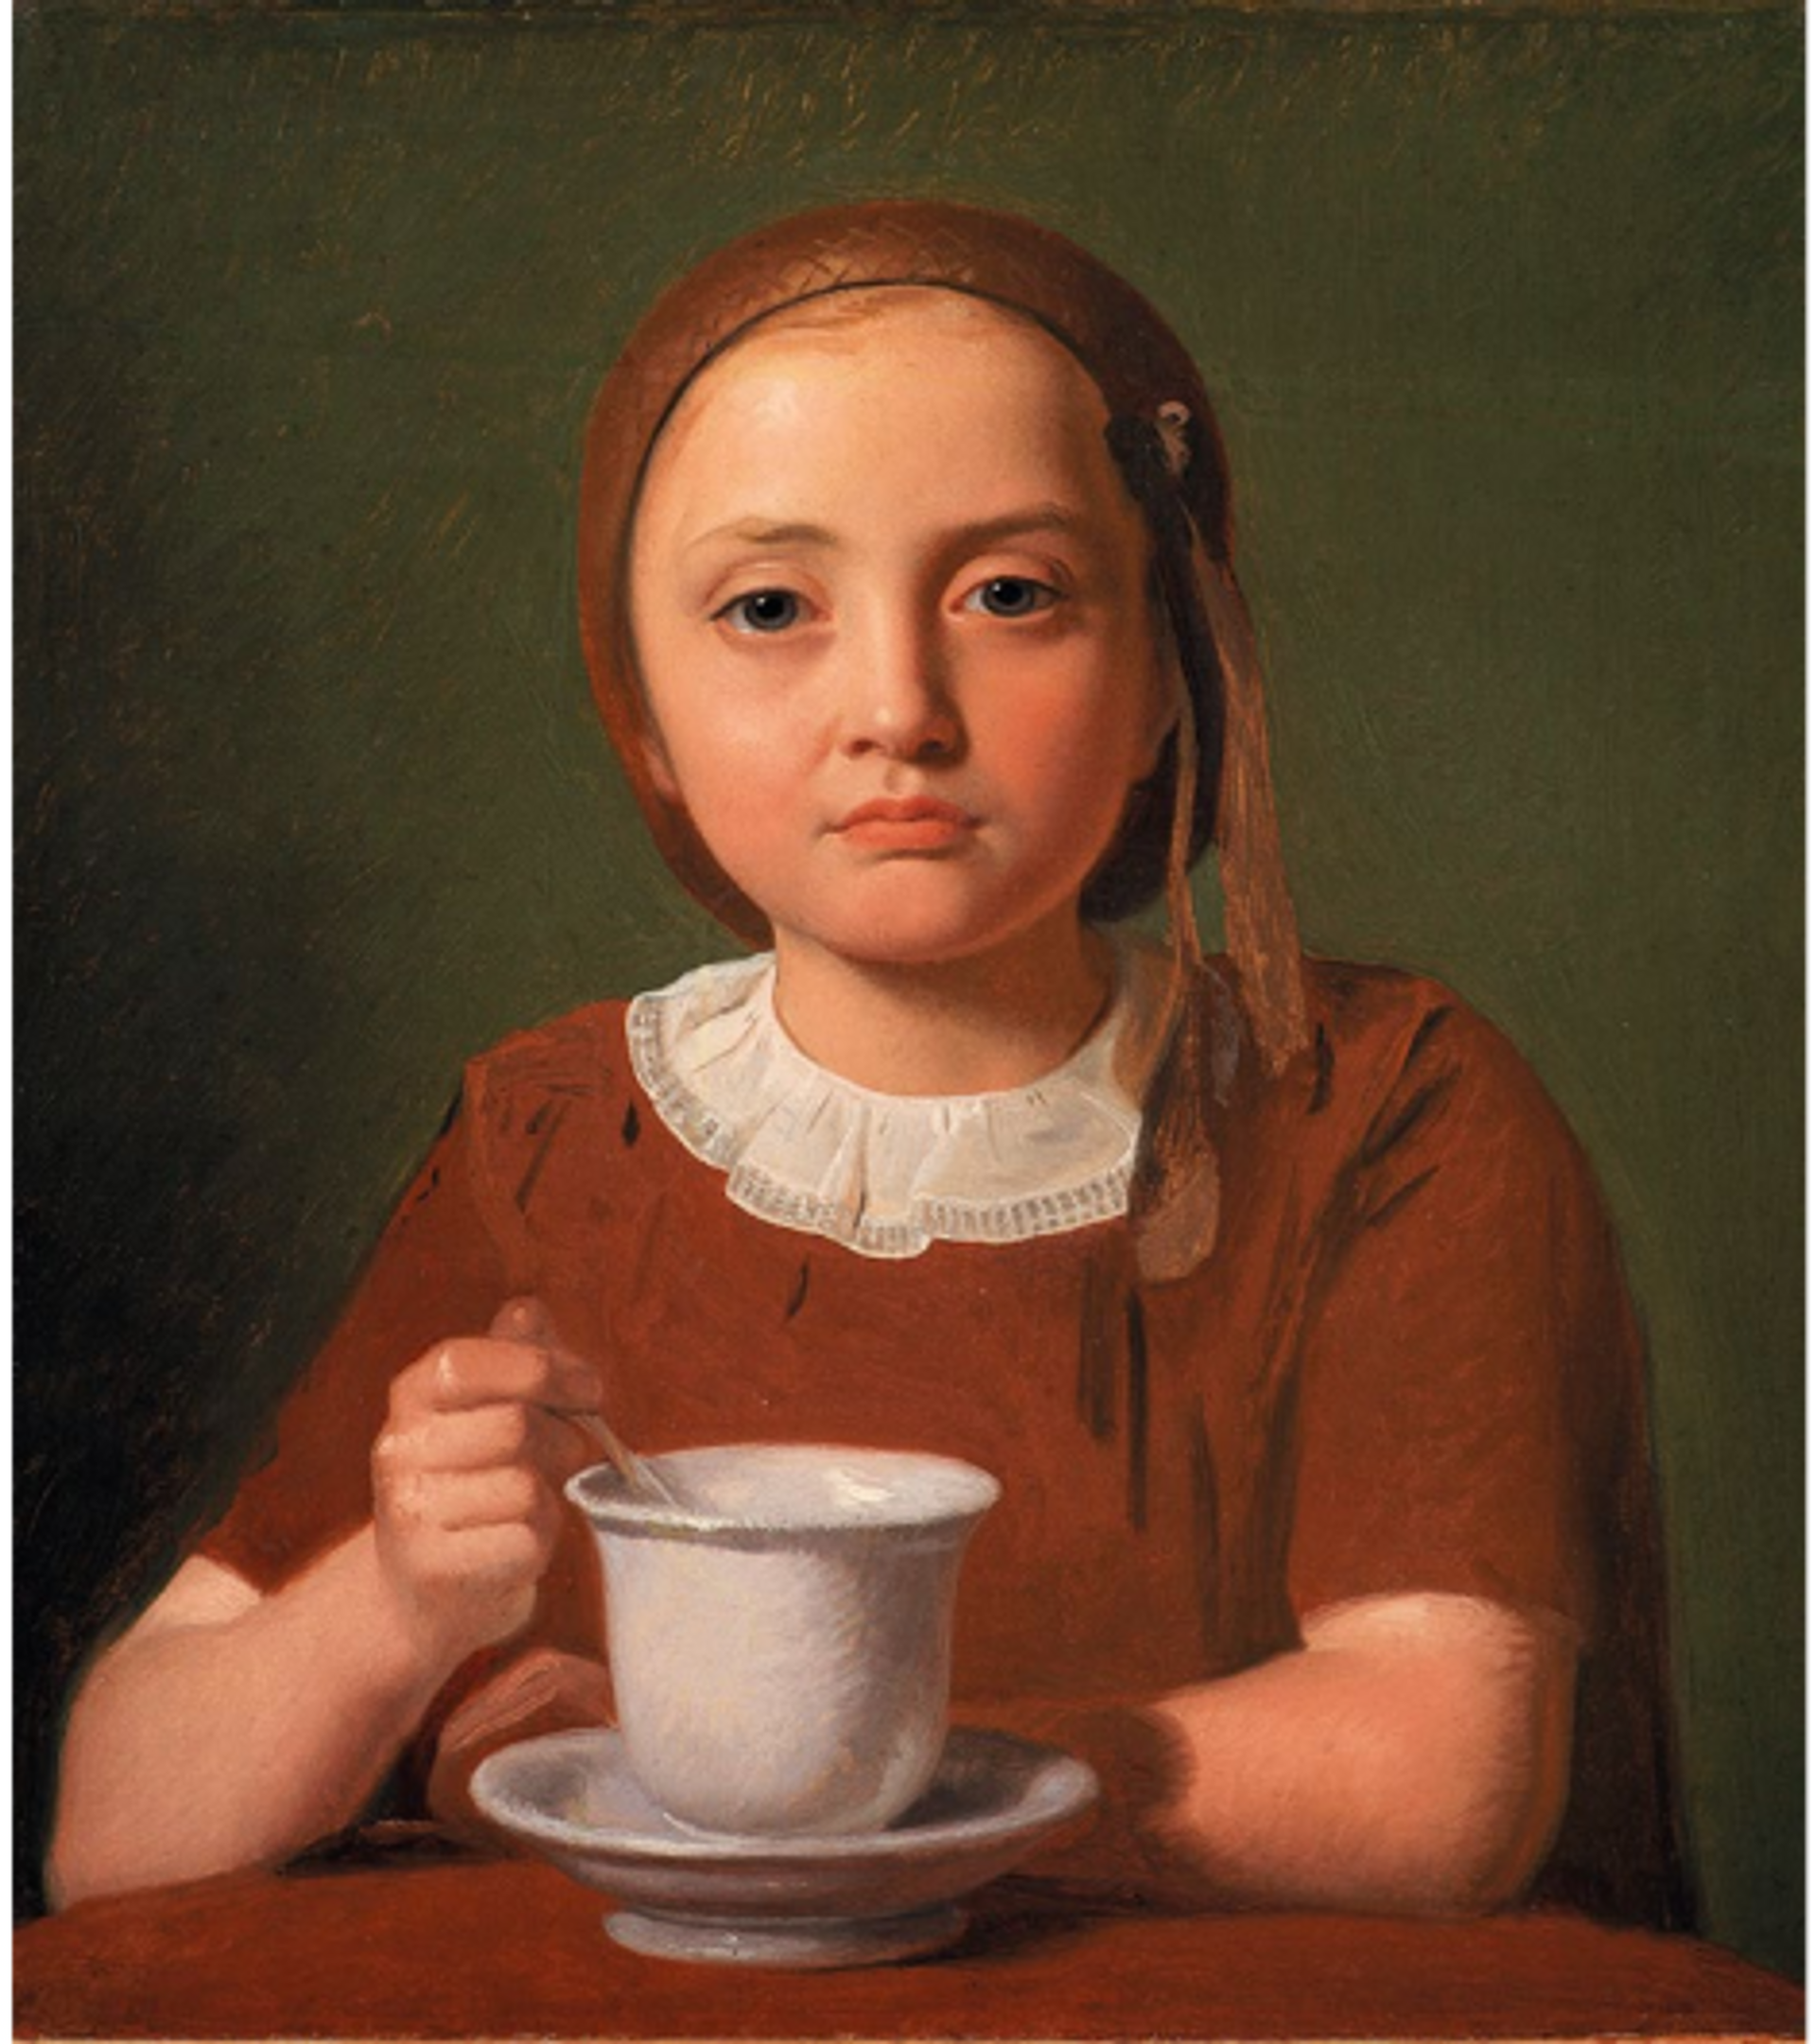 Constantin Hansen, Petite fille, Elise Købke, avec une tasse, 1850, huile sur toile, Statens Museum for Kunst, Copenhague. © SMK Photo/Jakob Skou-Hansen